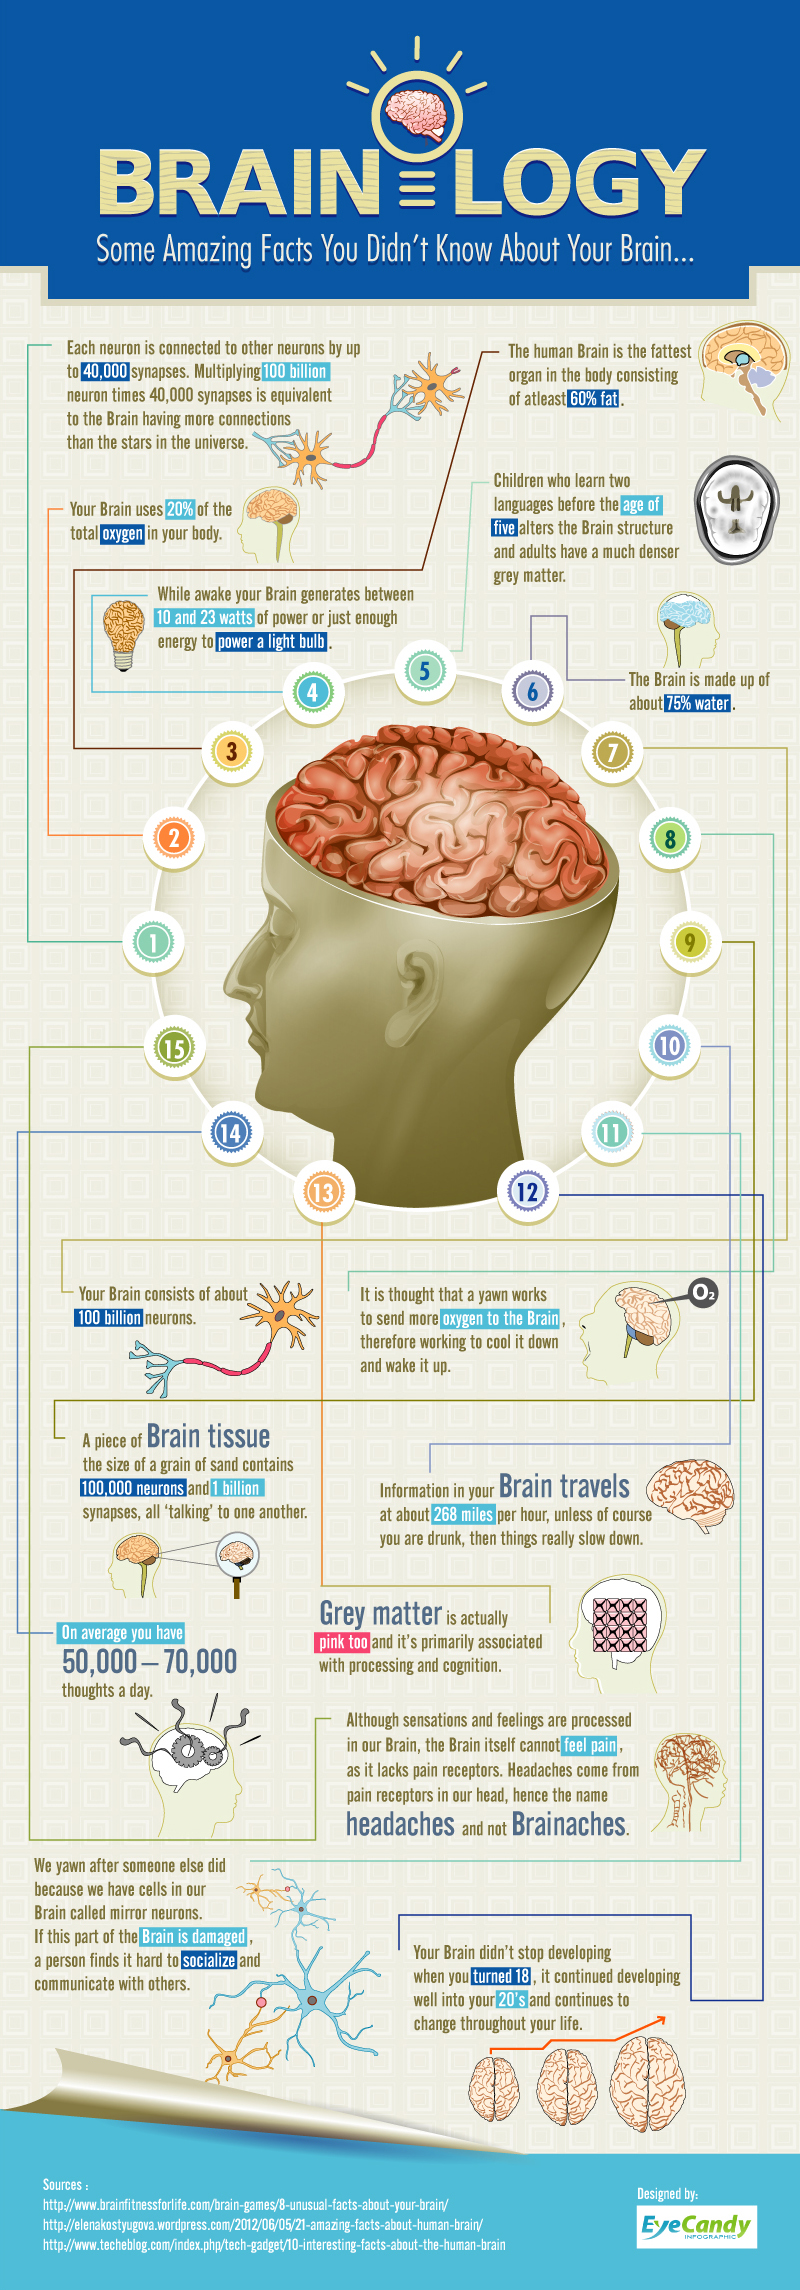 brainology